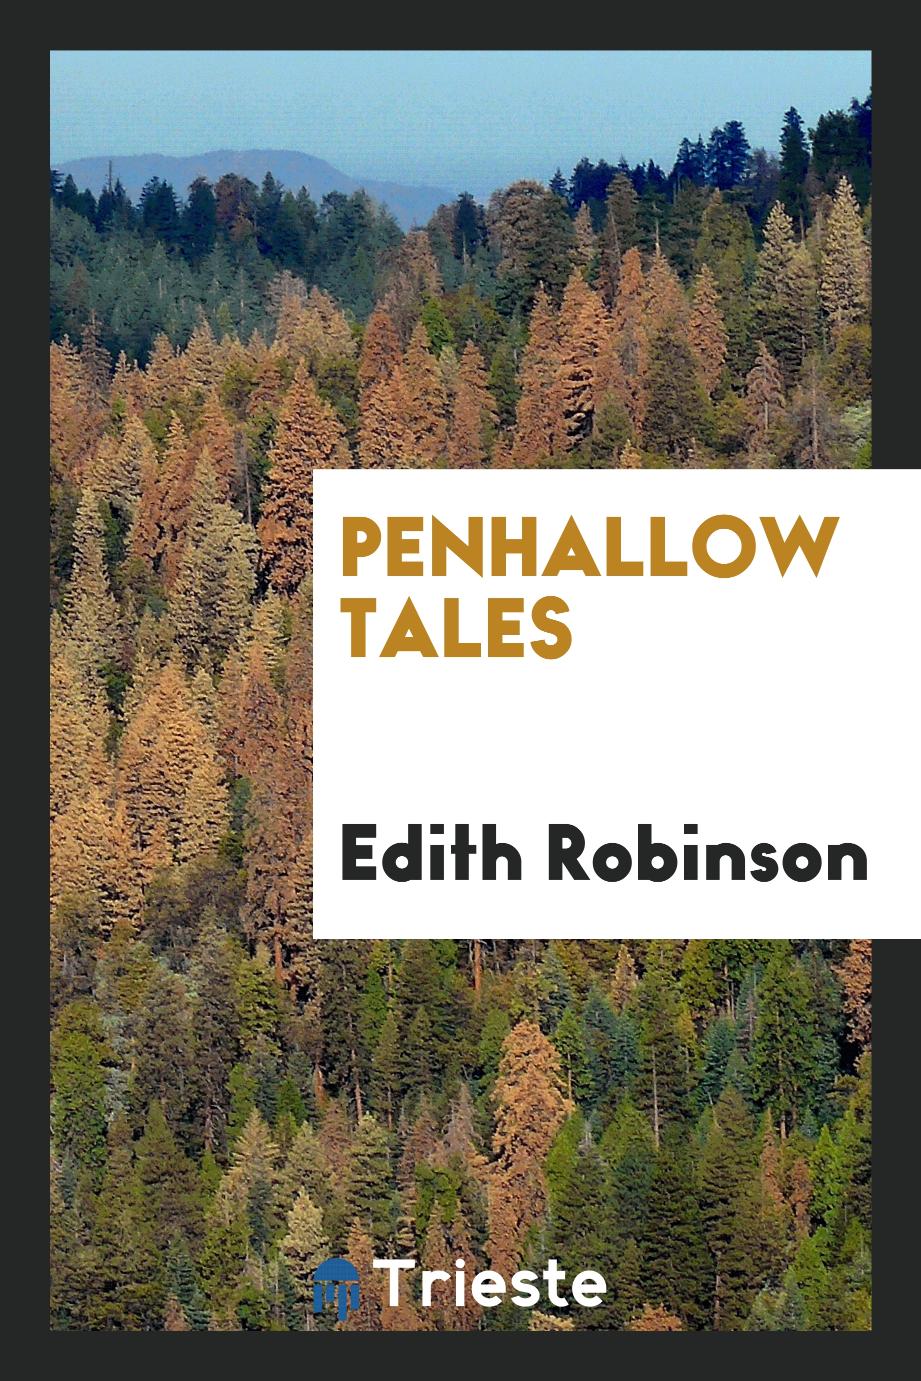 Penhallow tales